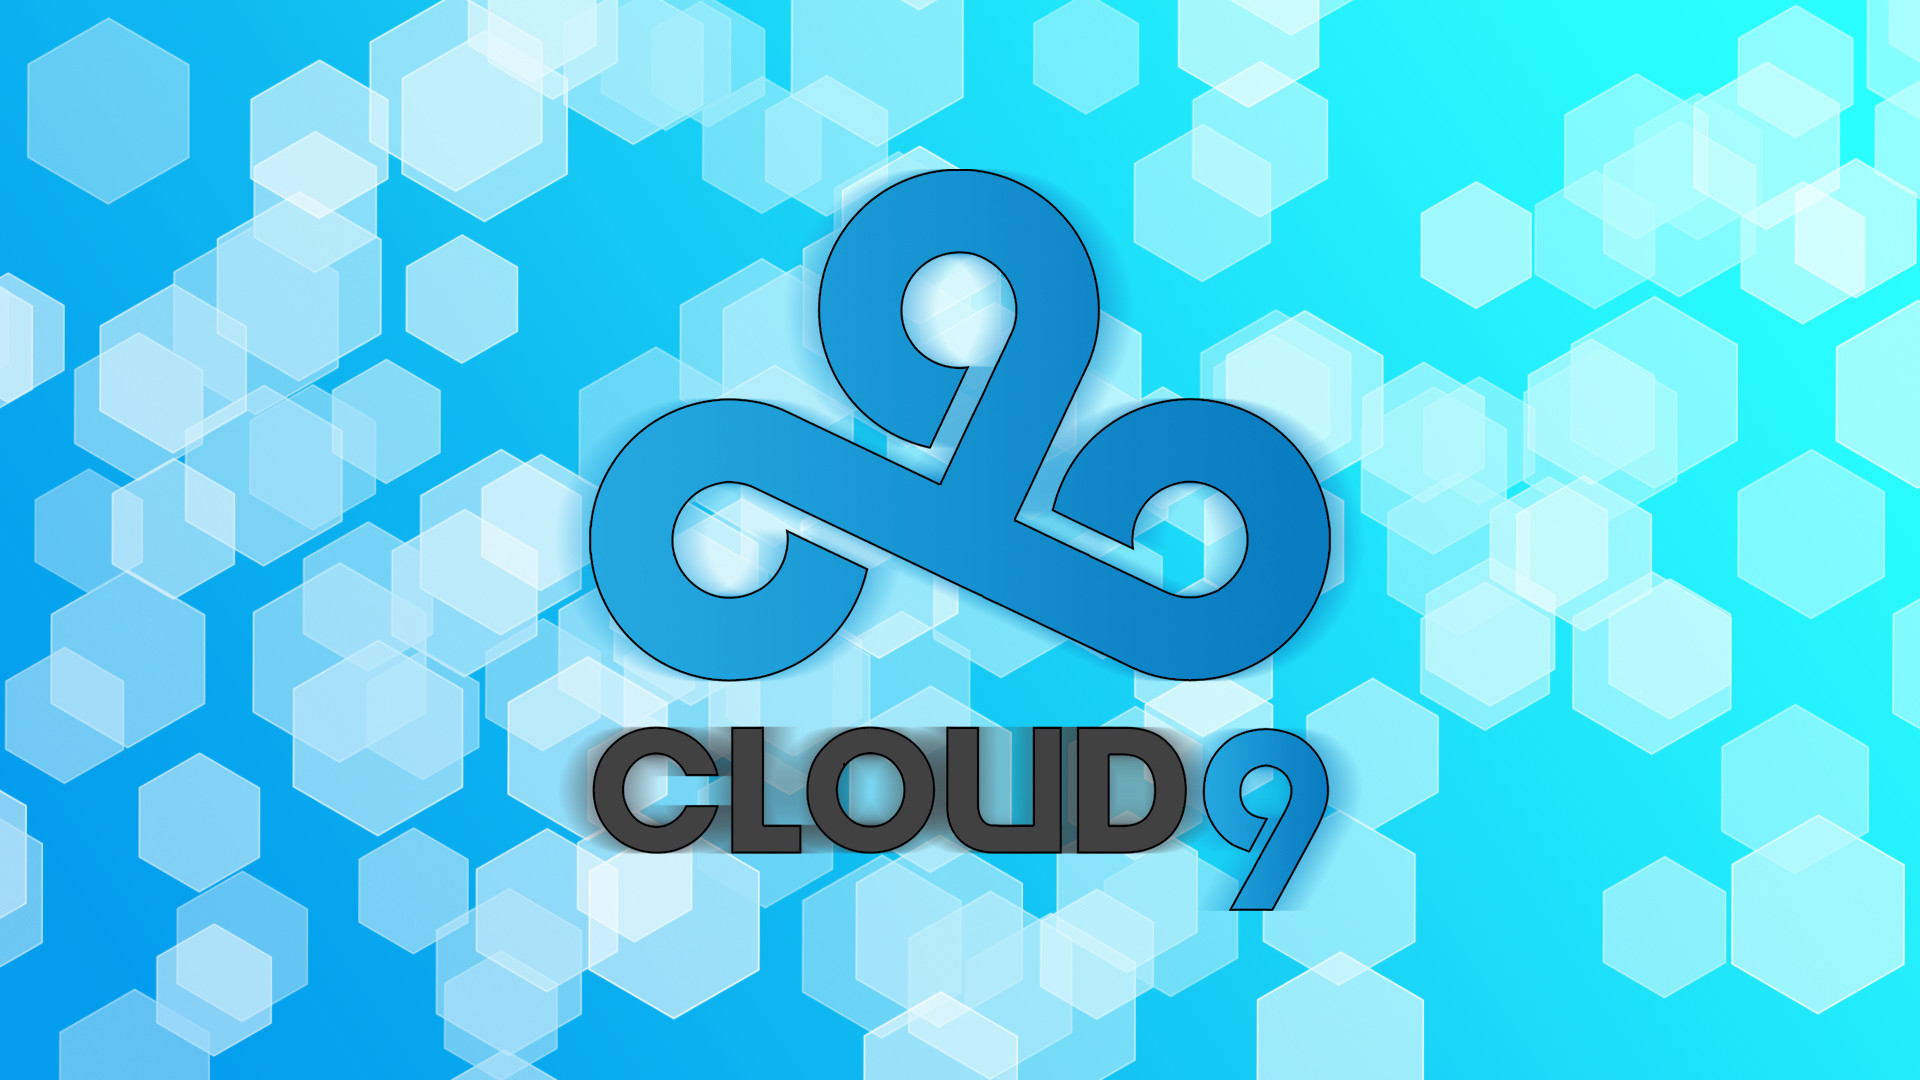 Cloud 9 kenosha